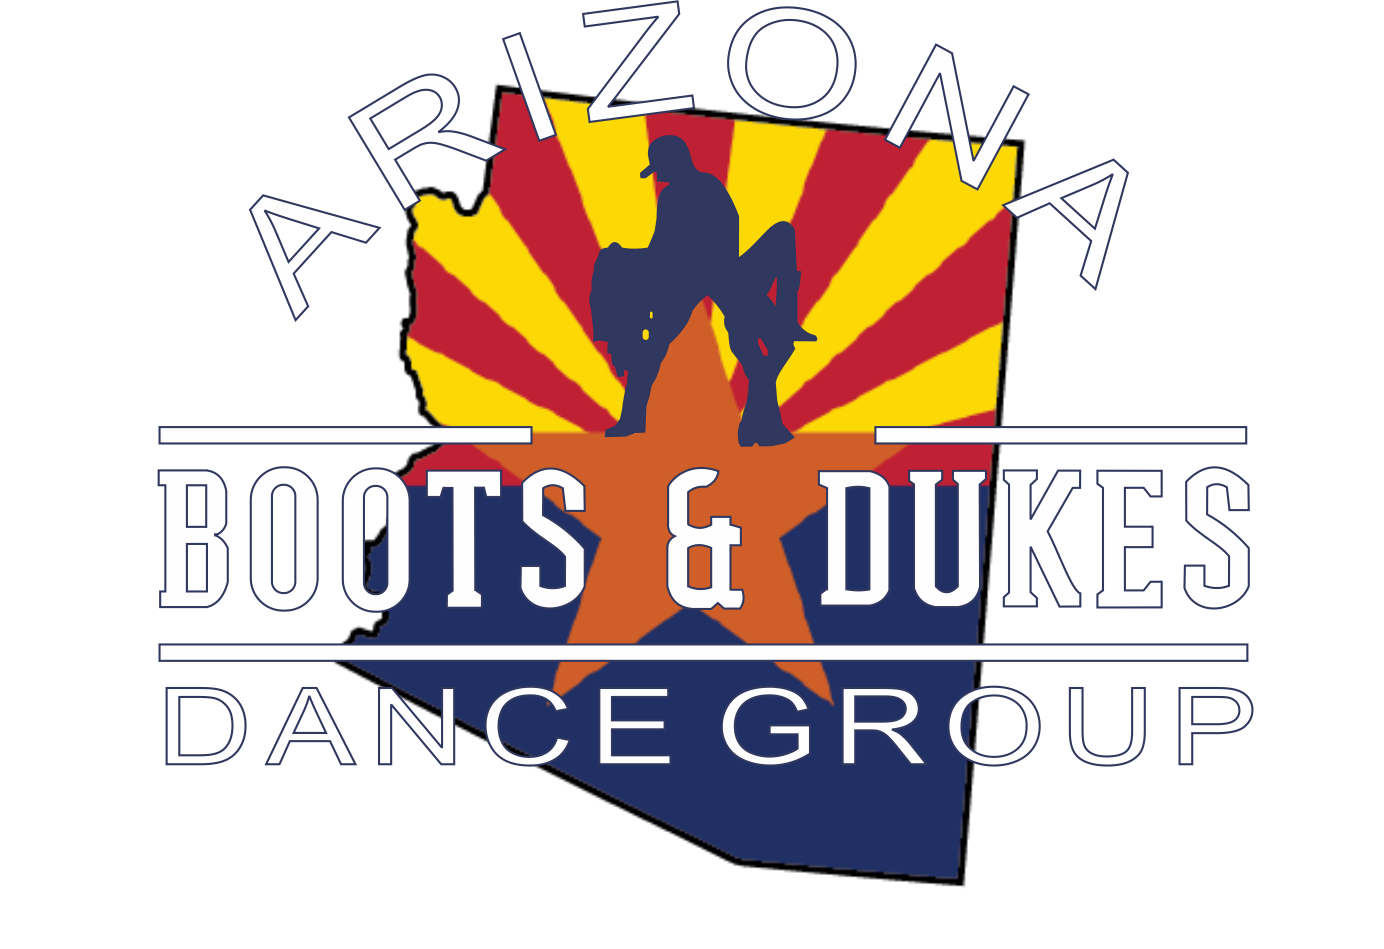 Boots & Dukes Dance Group